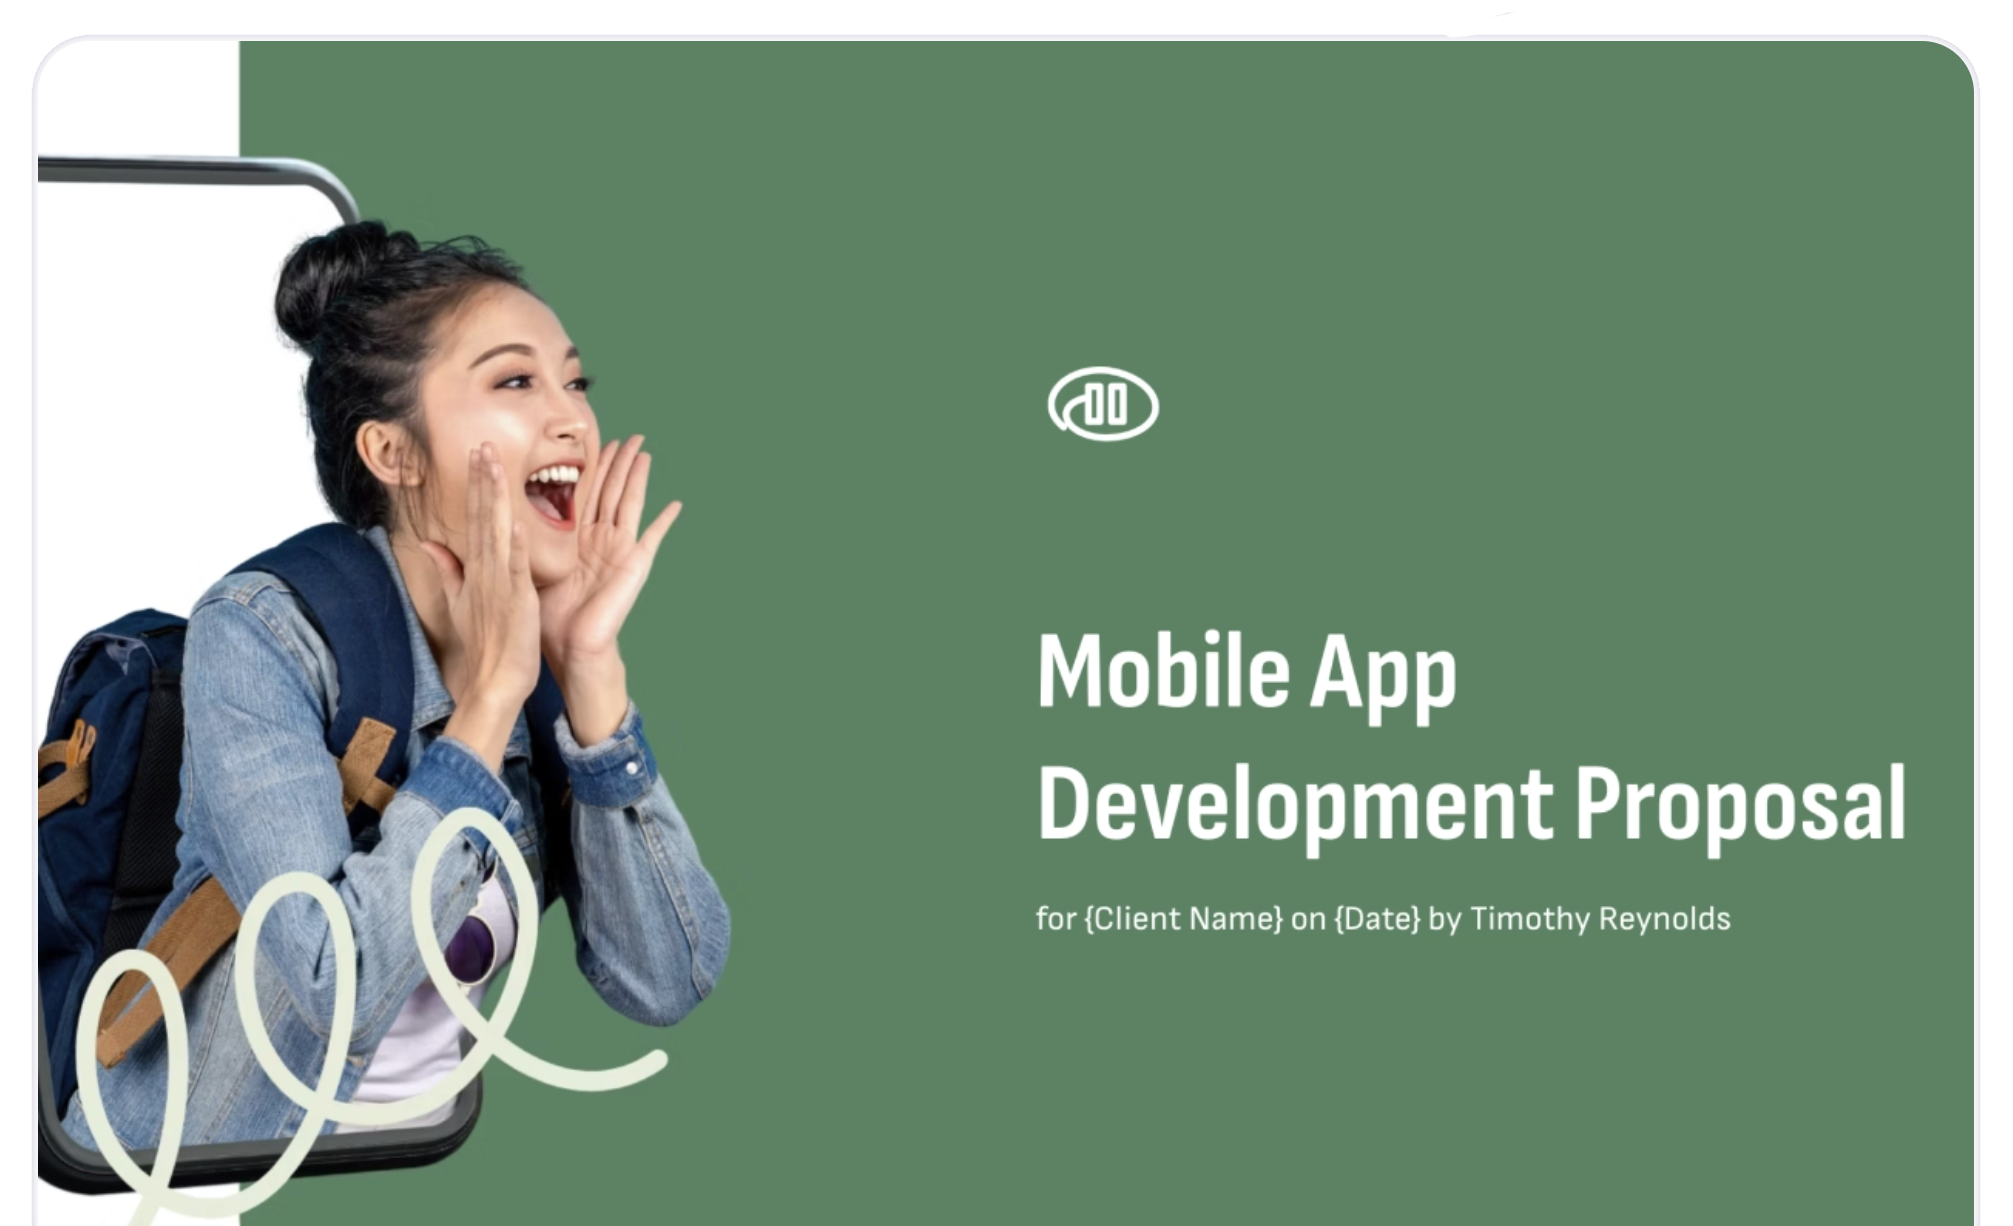 Mobile App Development Proposal Template